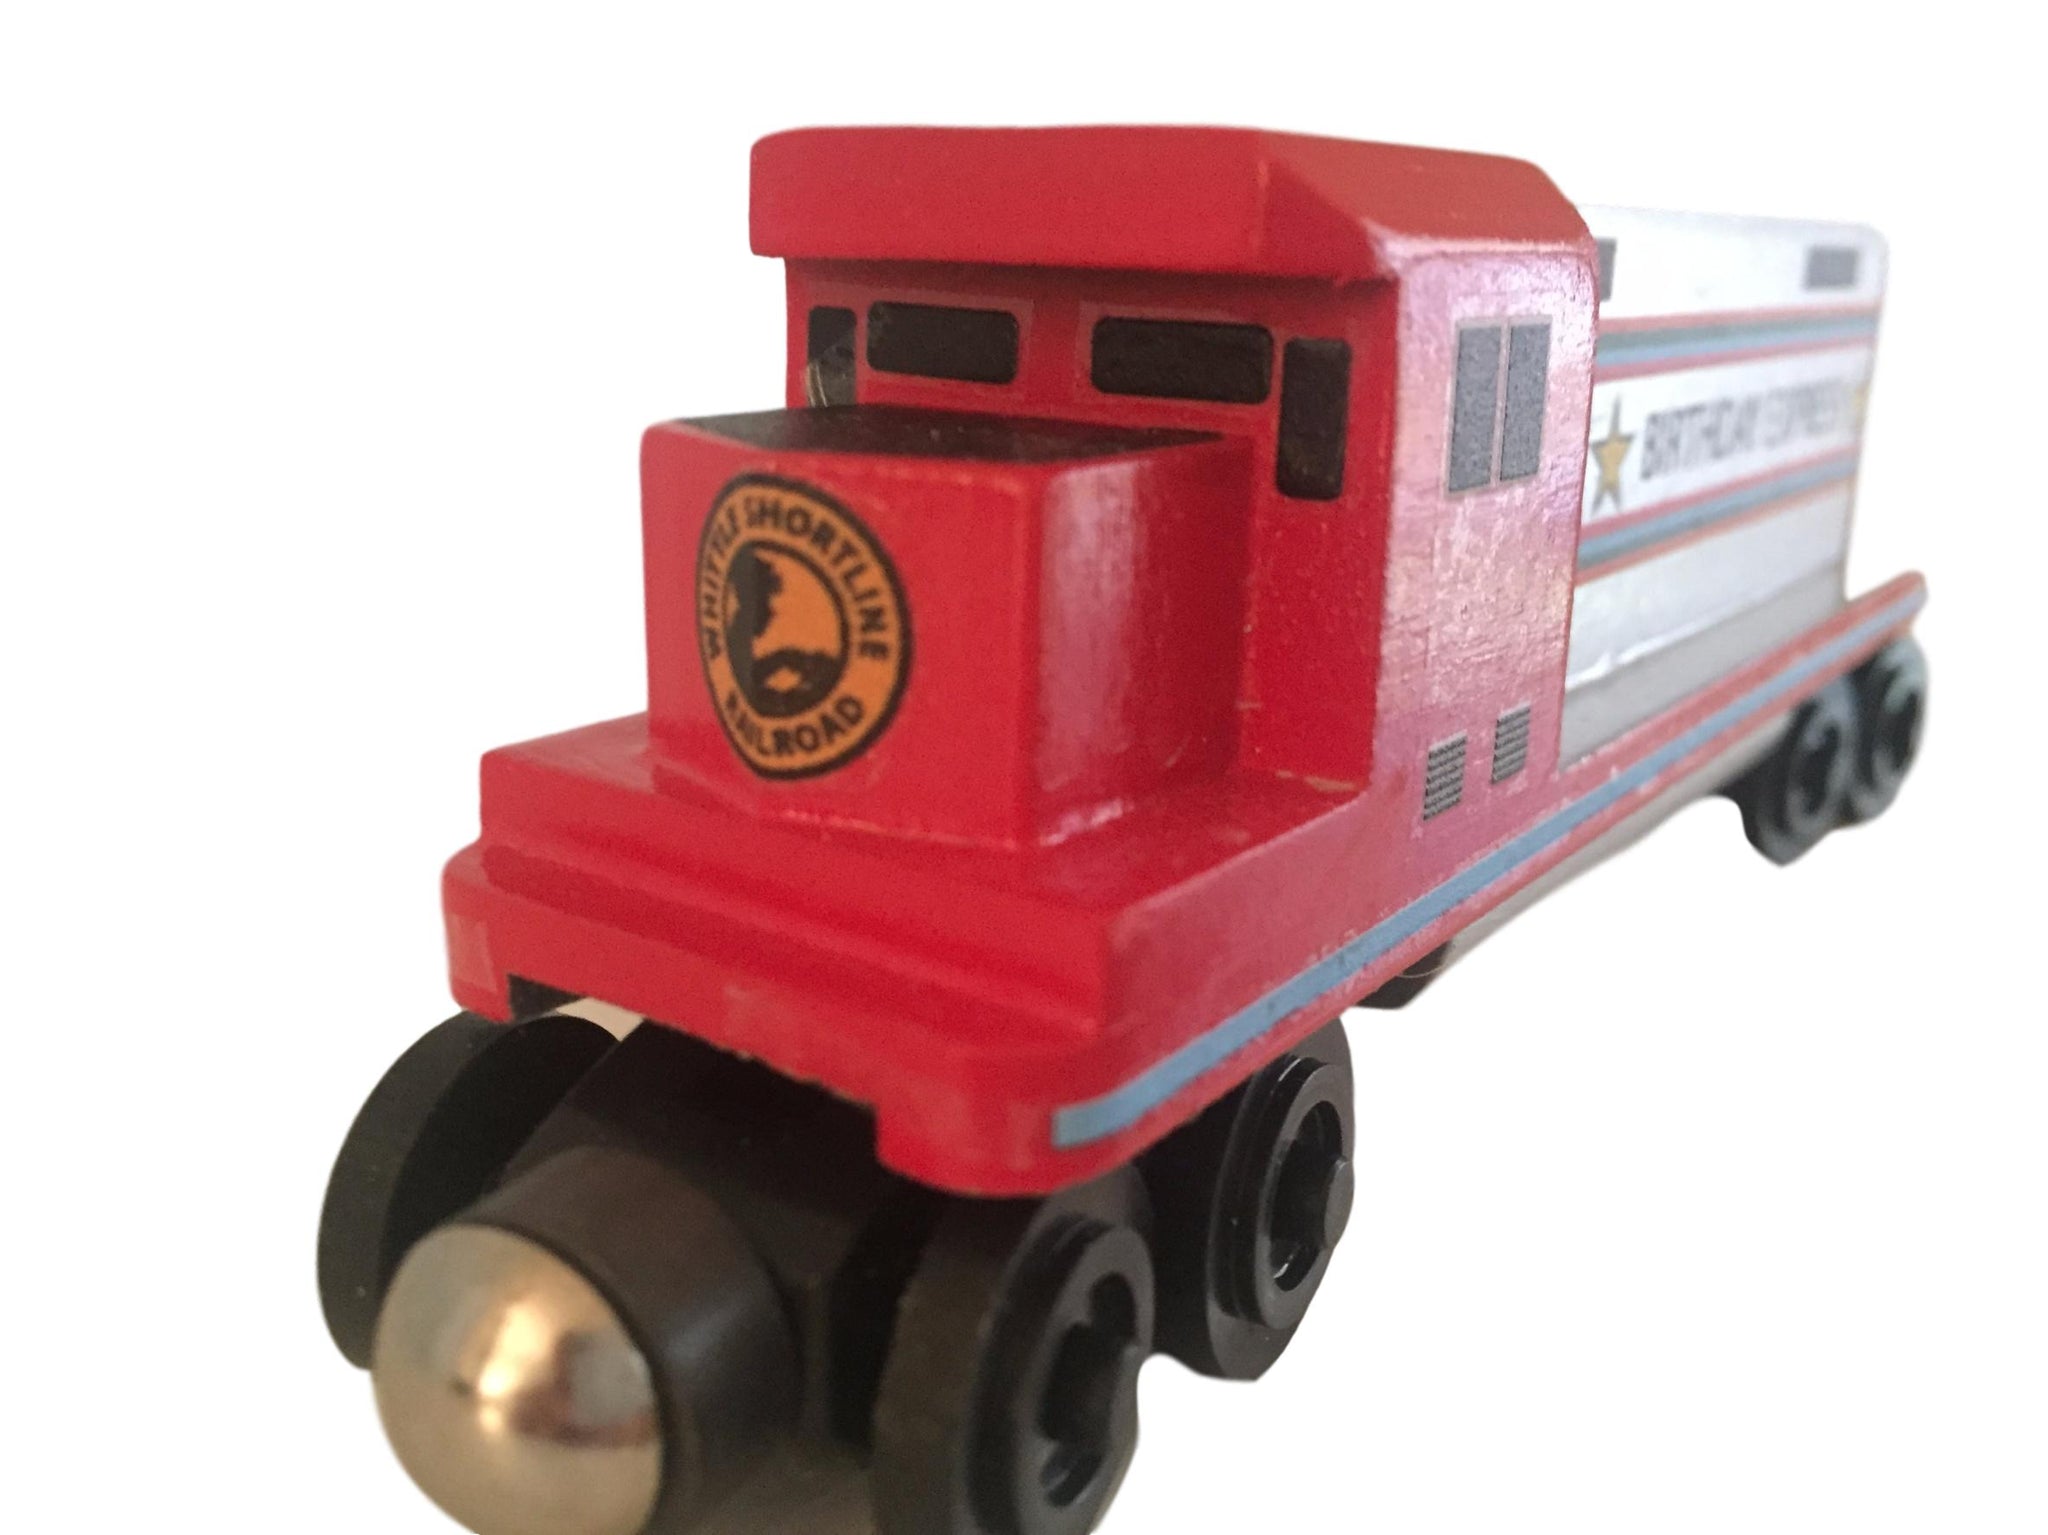 Birthday Express GP-38 Birthday Engine by Whittle Shortline Railroad